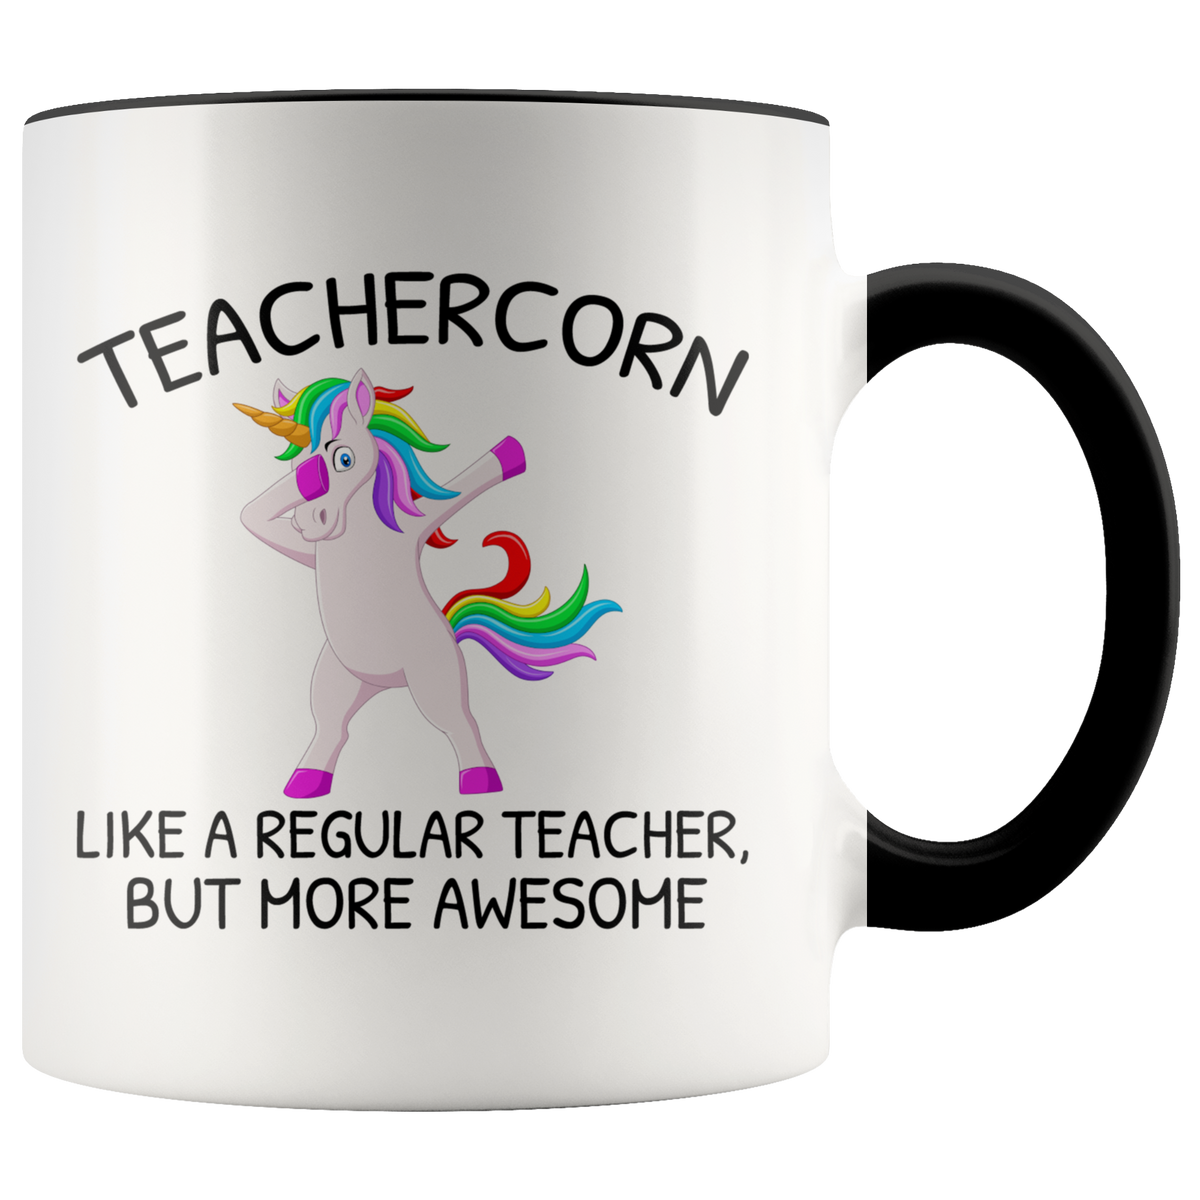 Teacher Mug Teacher Gift Unicorn Teacher Mug - Teachercorn Like A Regular Teacher But More Awesome Accent Coffee Mug 11oz